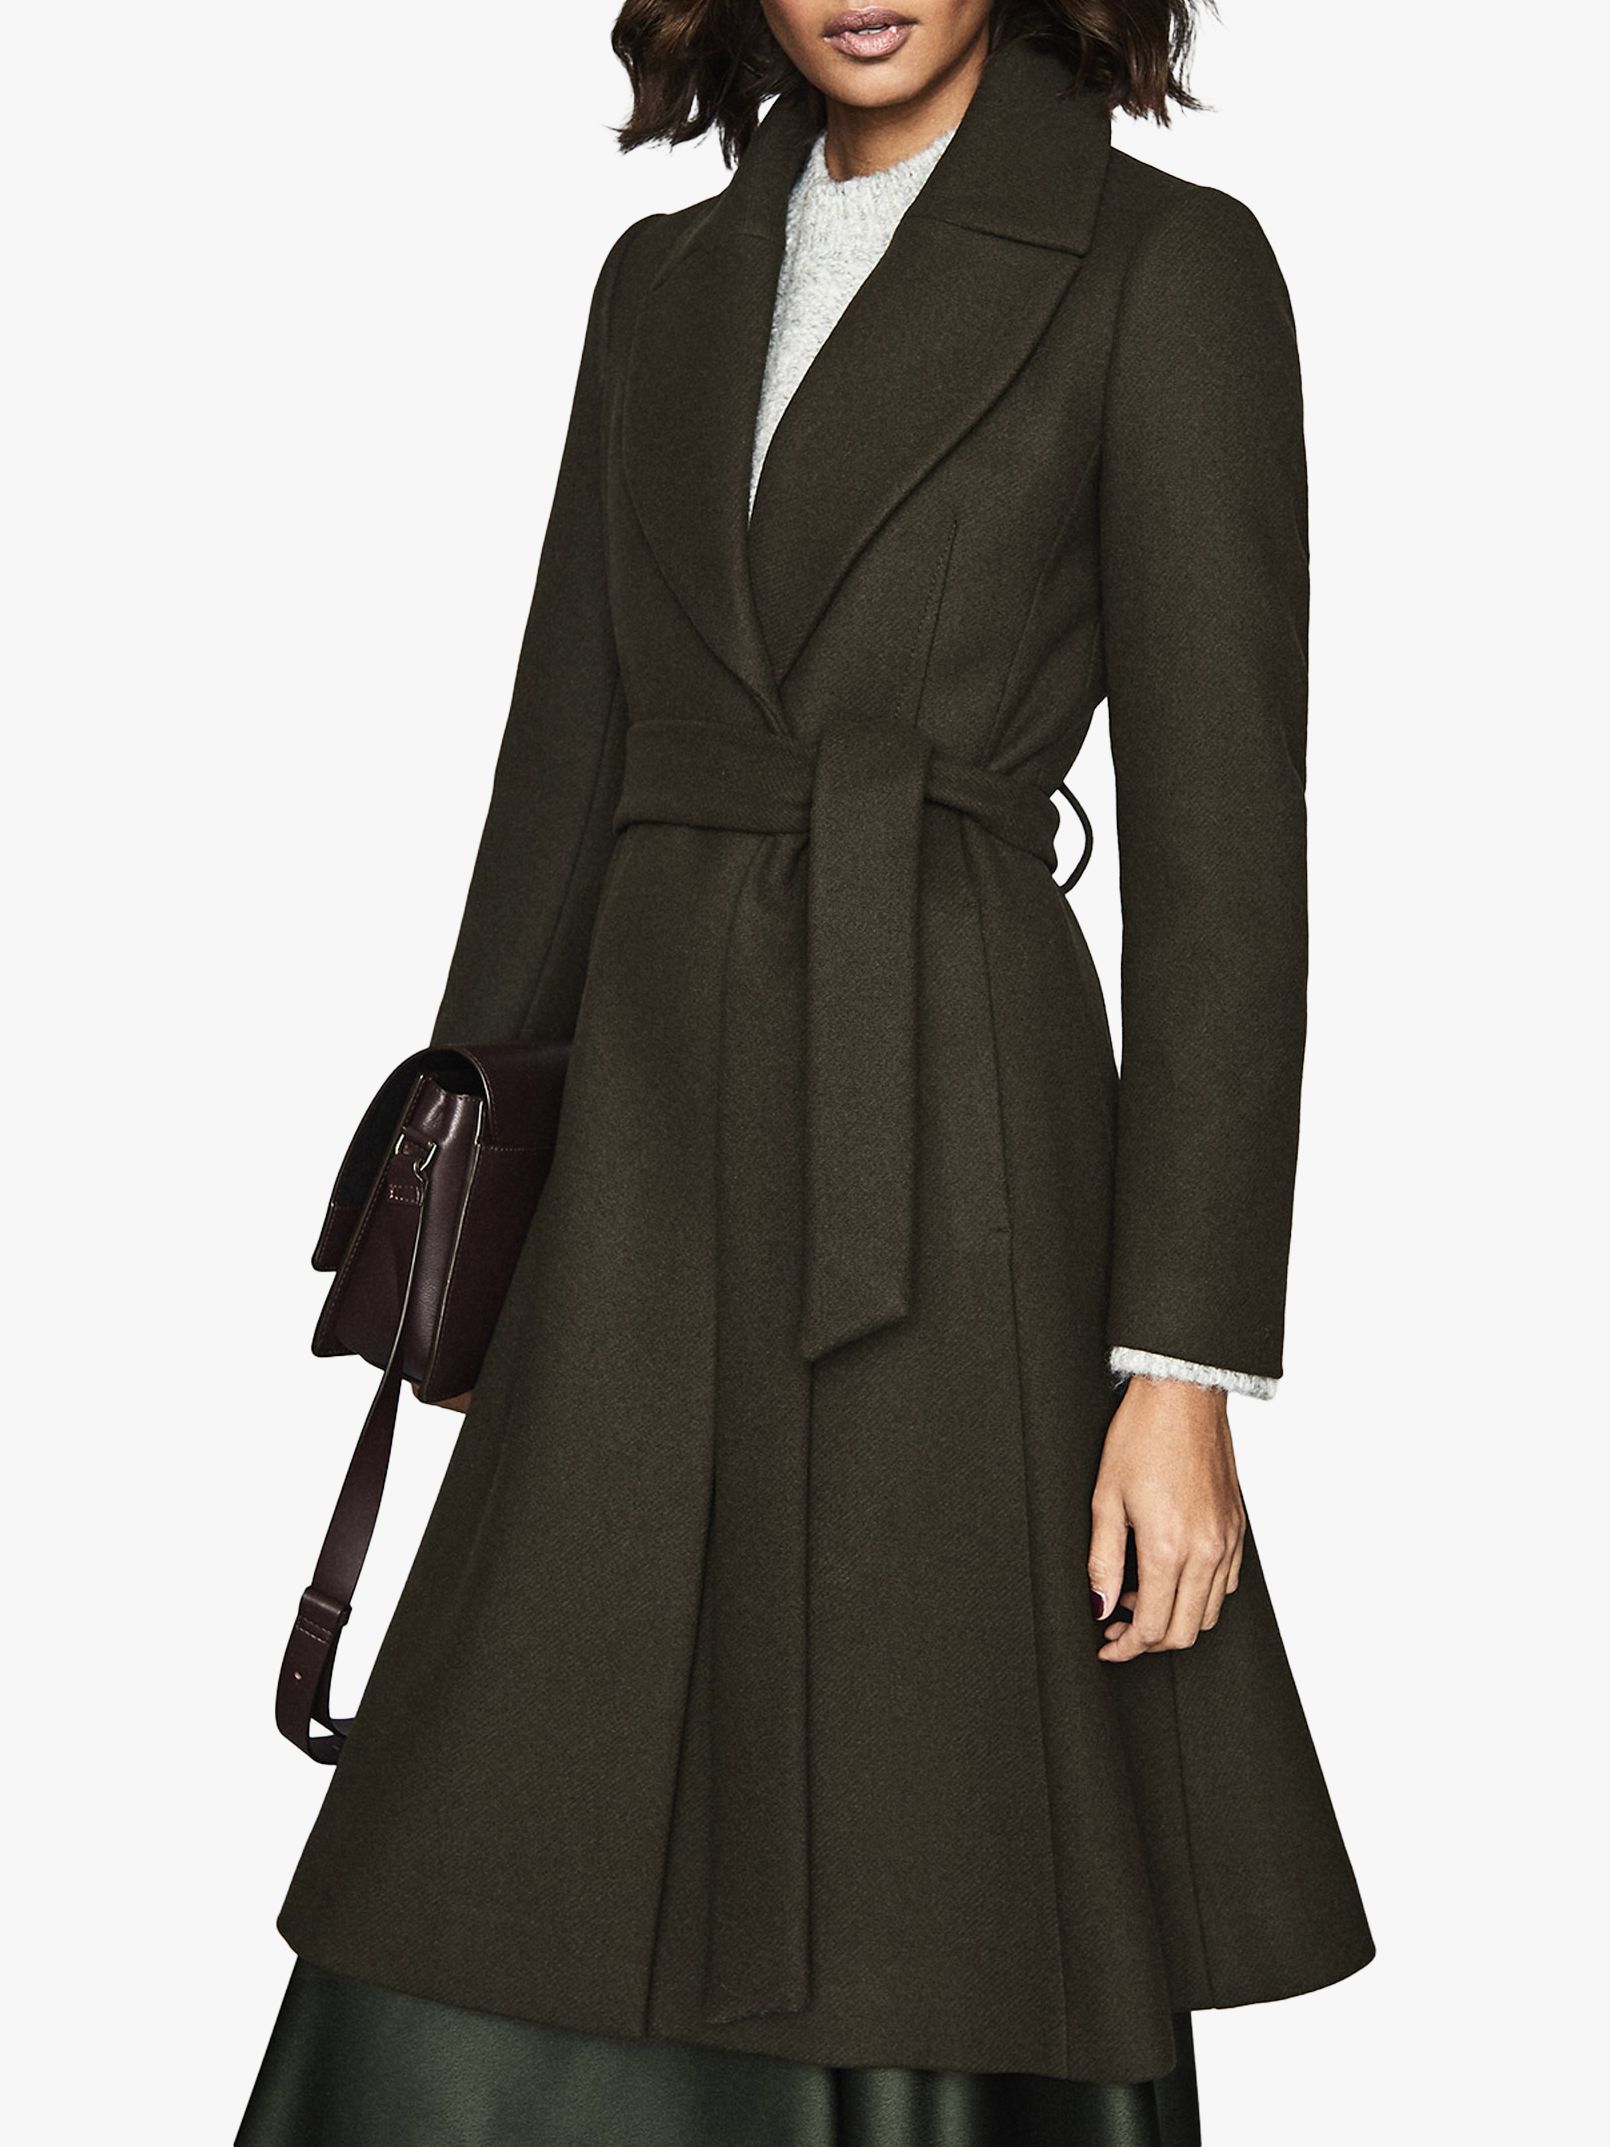 Reiss Hessie Wool Blend Belted Overcoat, Green at John Lewis & Partners